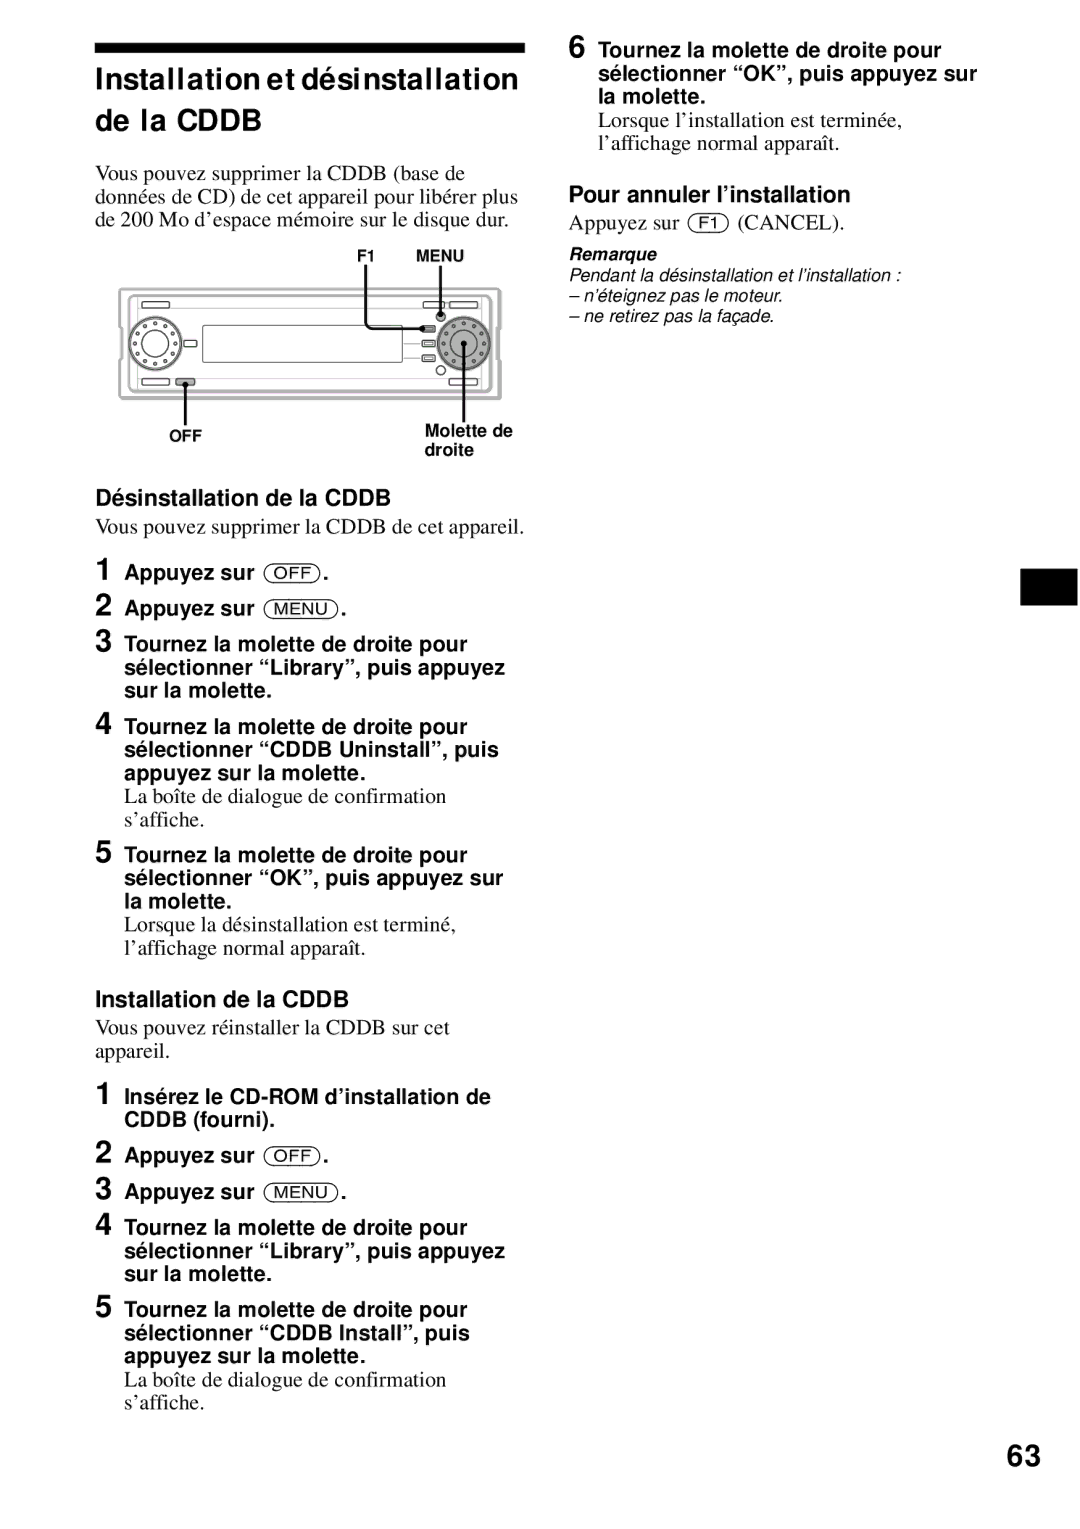 Sony MEX-1HD Installation et désinstallation de la Cddb, Désinstallation de la Cddb, Installation de la Cddb 